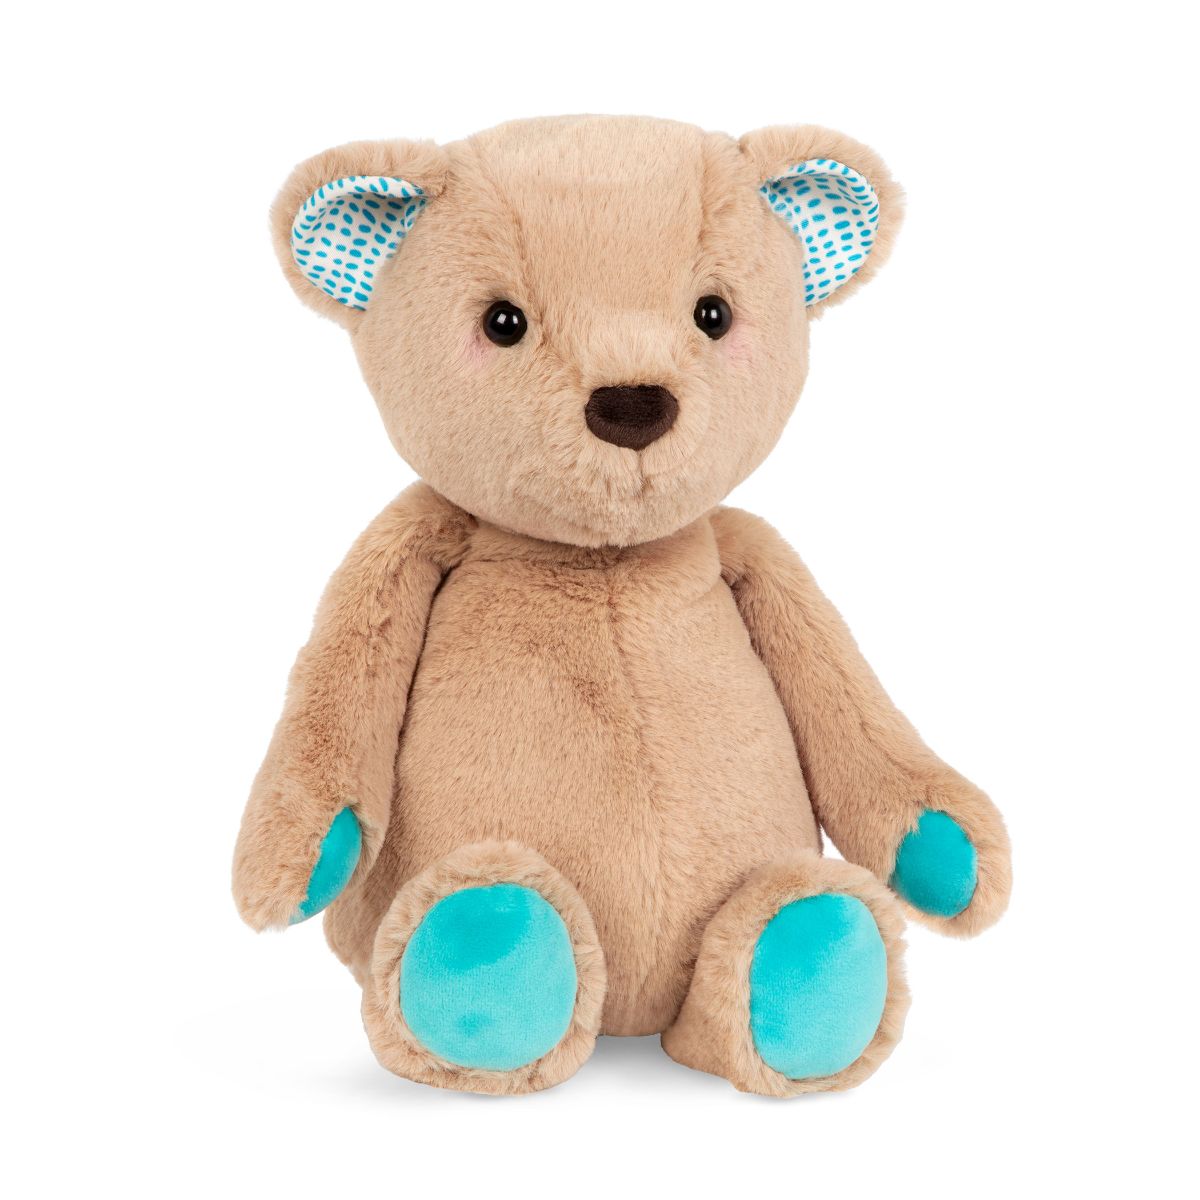 Tobar Blushing Cuddly Bear Night Light Up Soft Teddy Toys Glows Baby Sleep Relax 